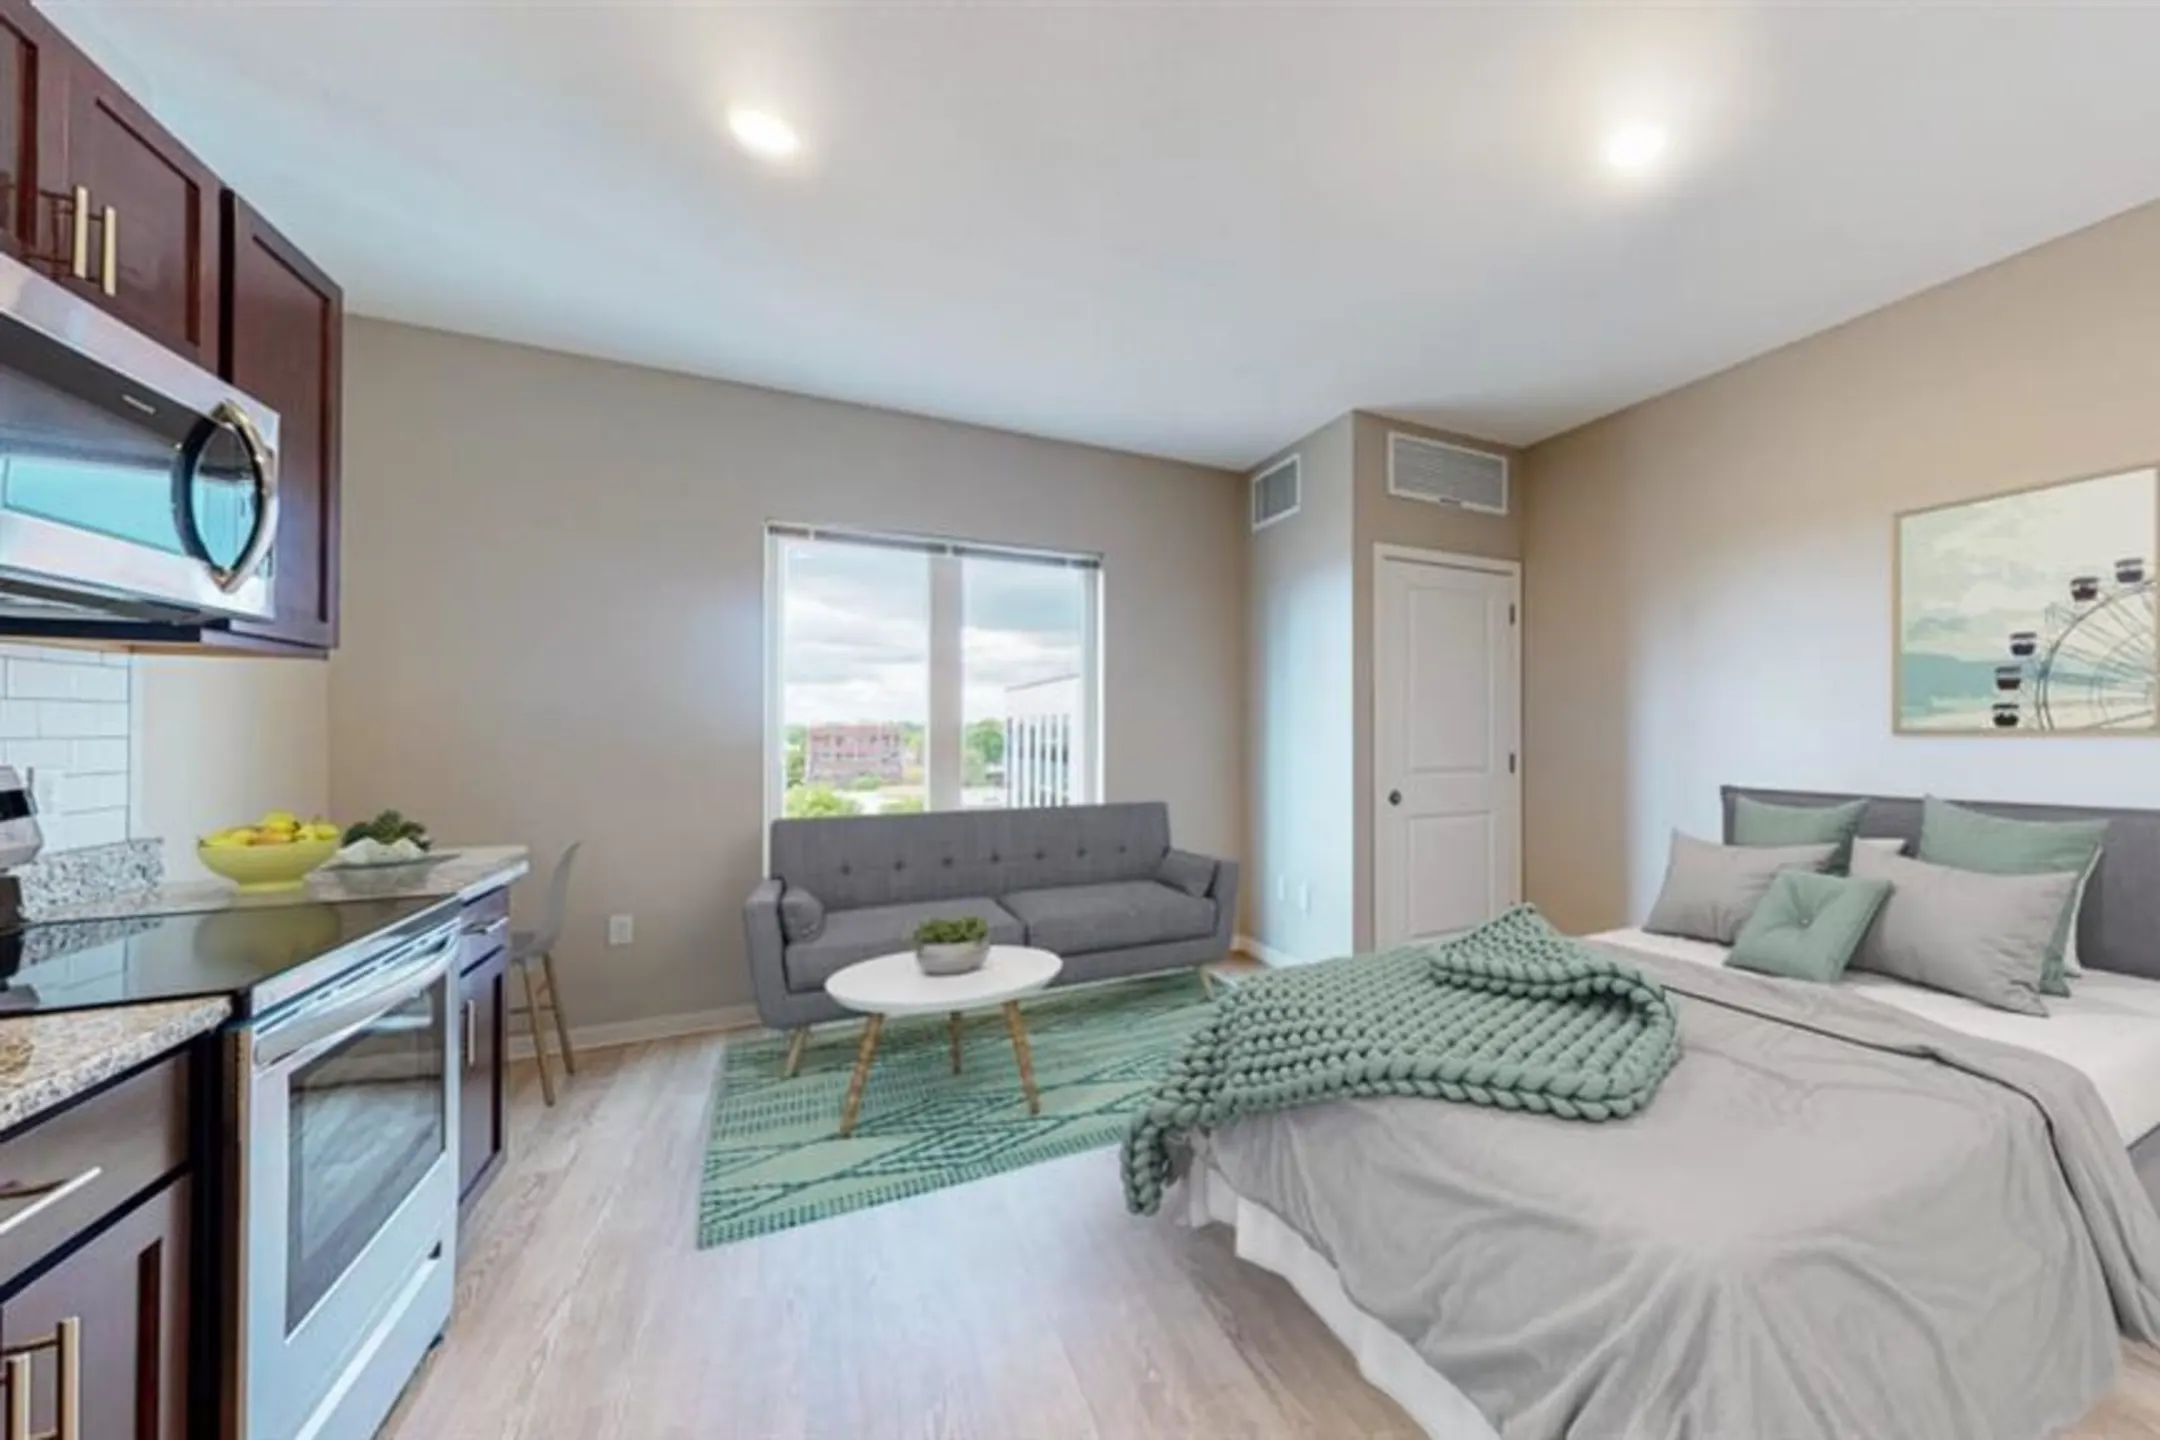 Bedroom - Timber & Tie Apartments - Minneapolis, MN